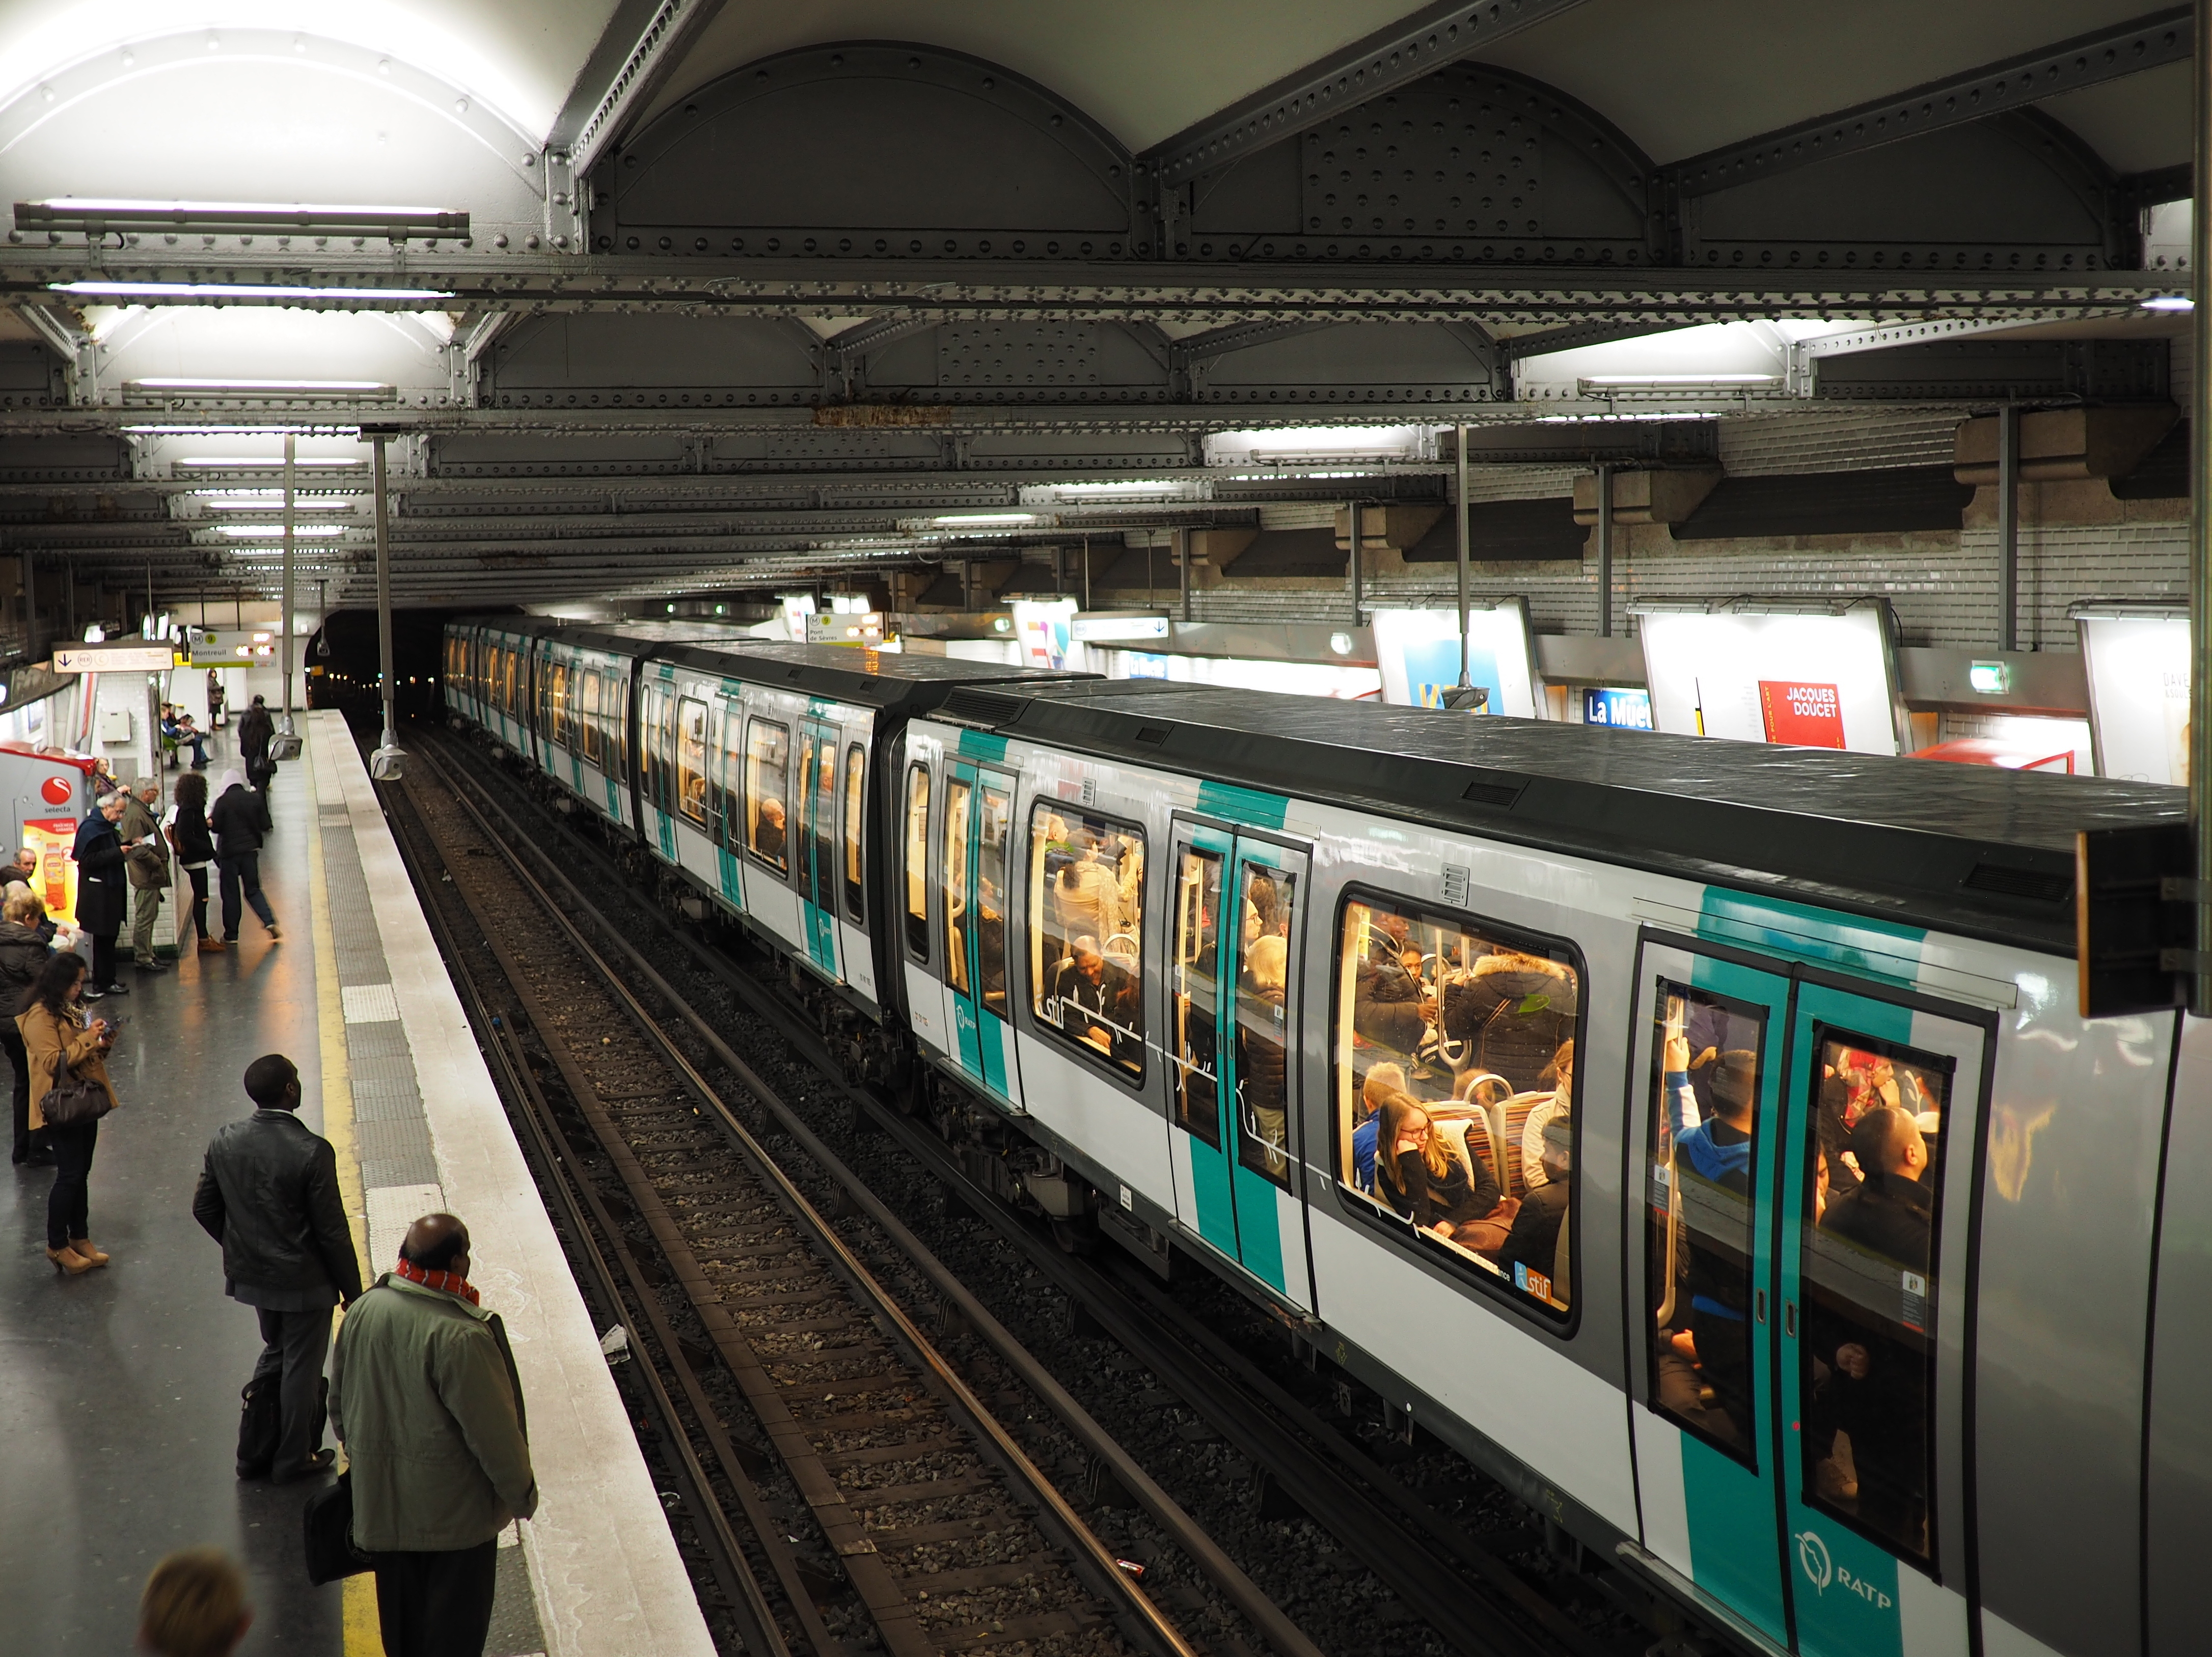 Метрополитены франции. Метро Парижа. Метропоезда Парижа. Станции метро во Франции. Поезд метро Франции.